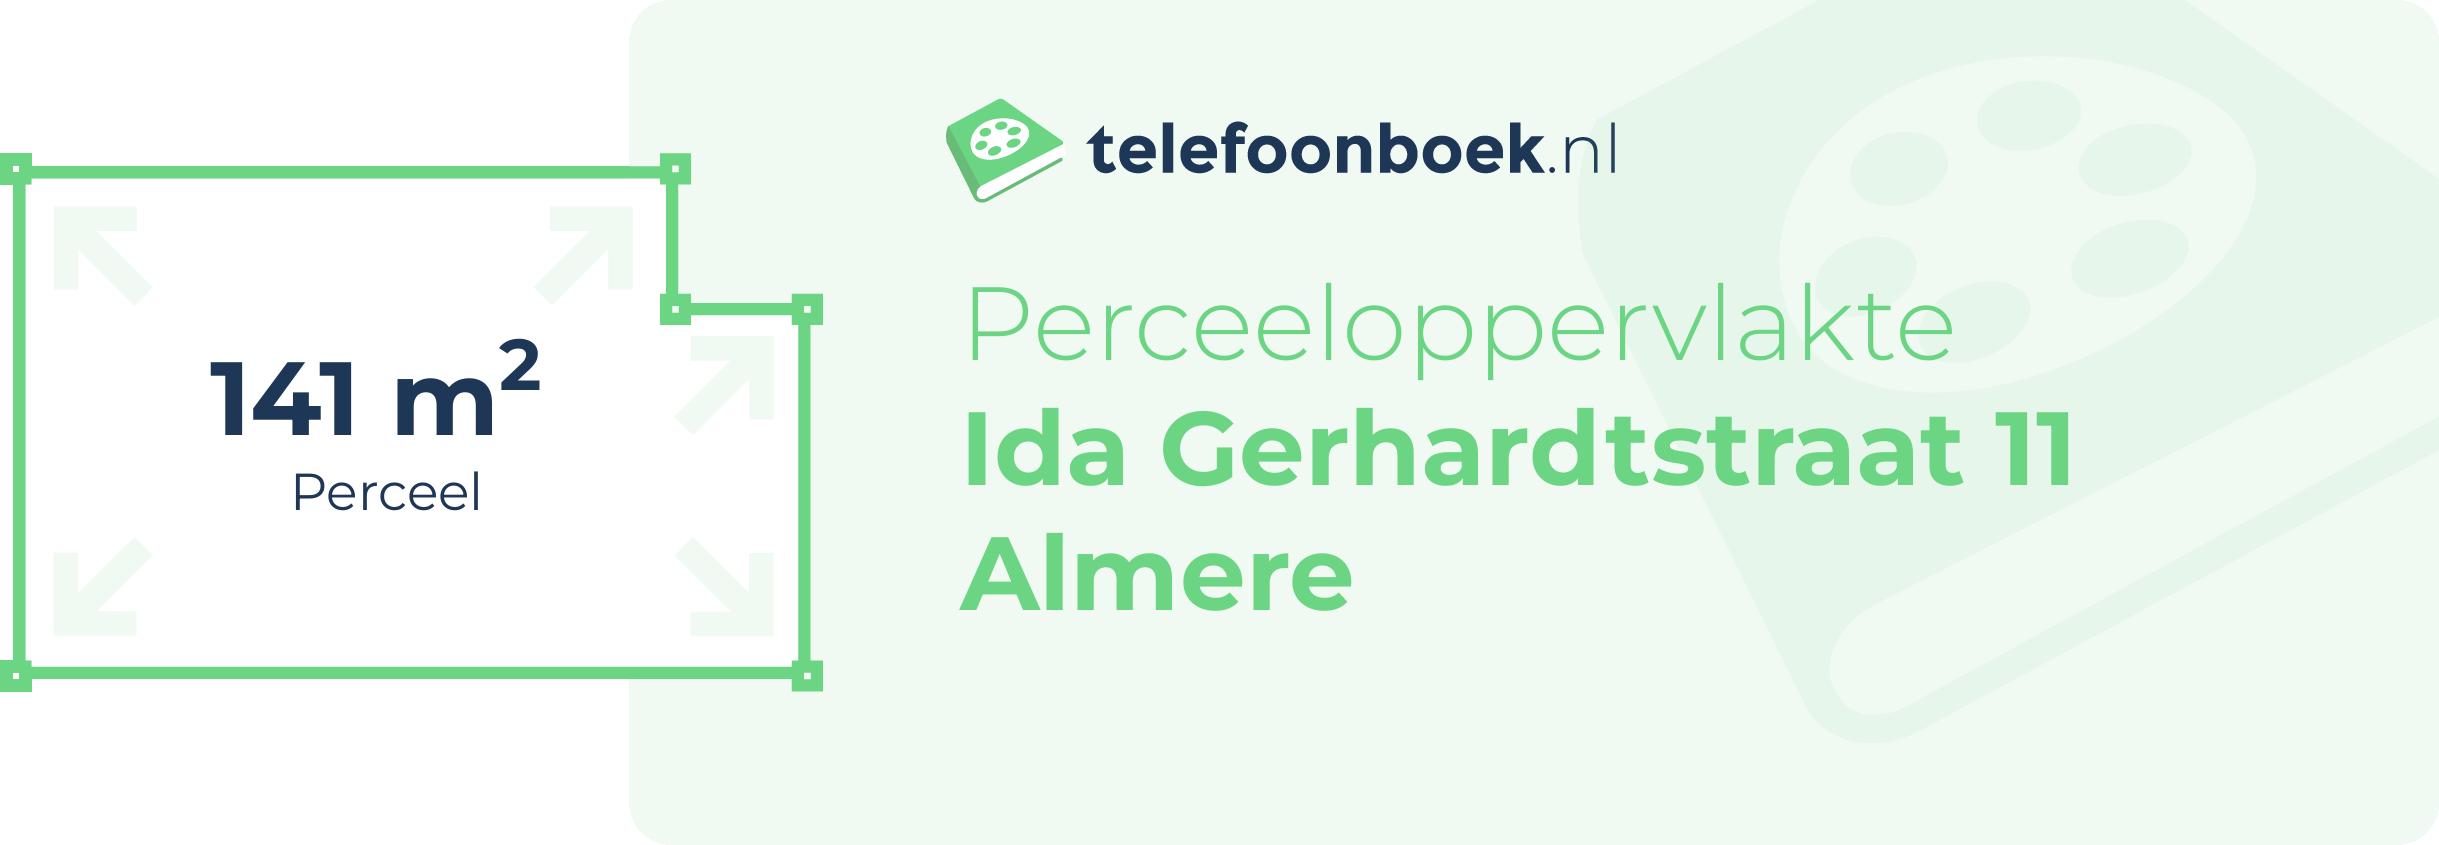 Perceeloppervlakte Ida Gerhardtstraat 11 Almere